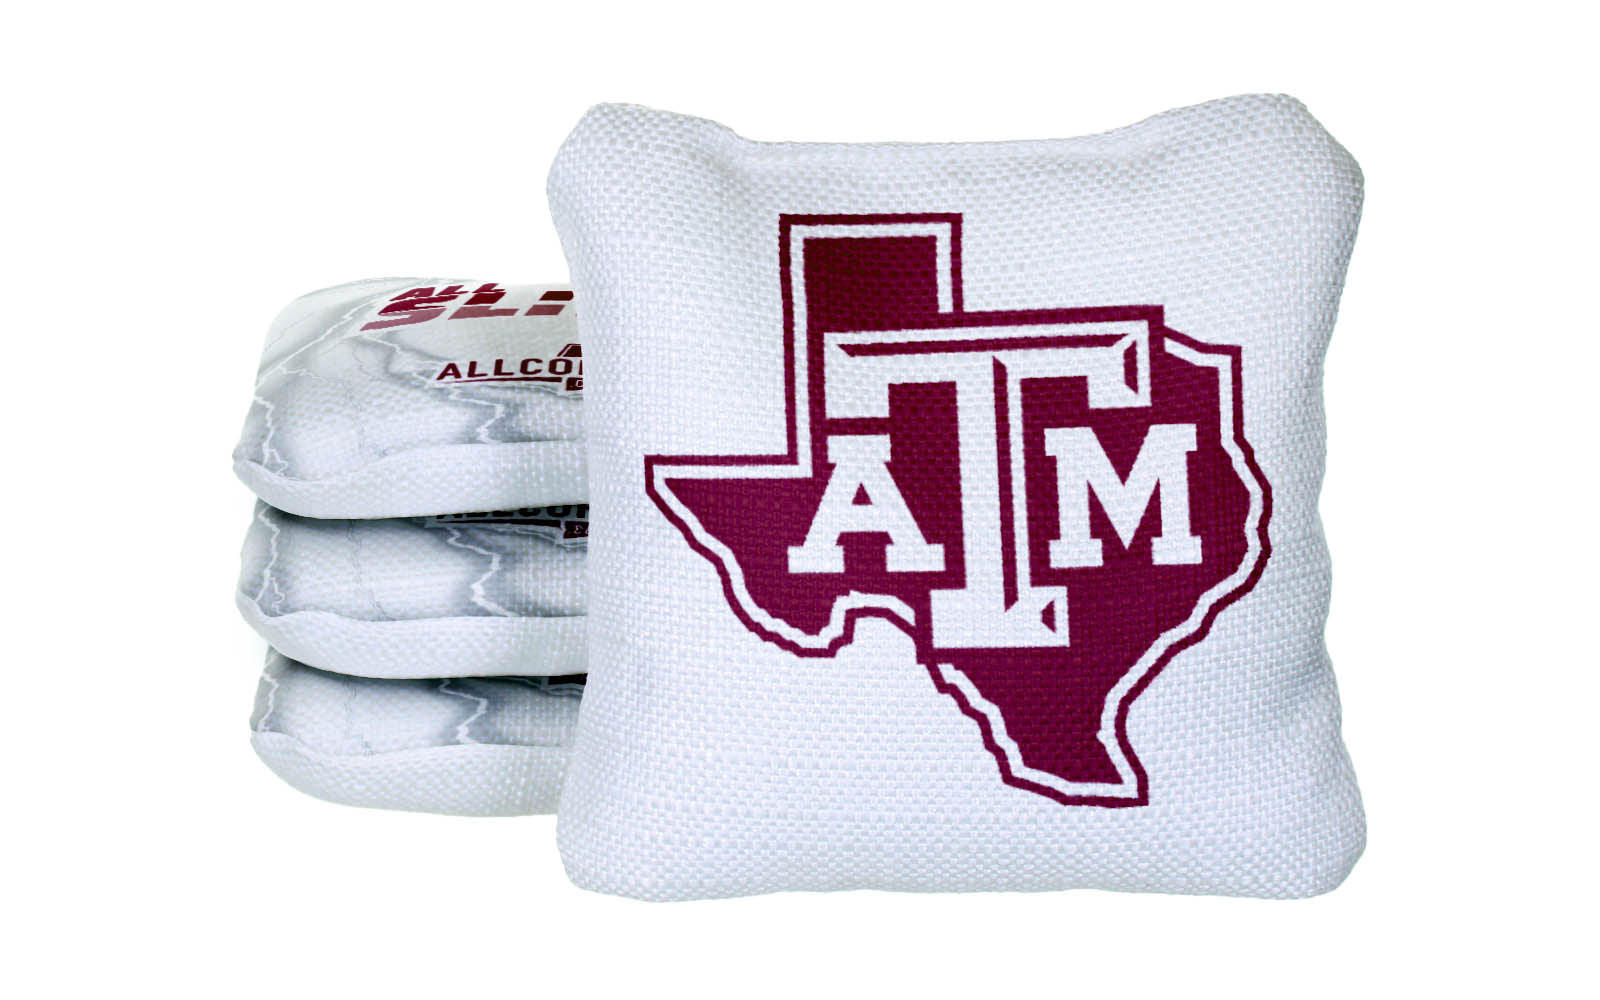 Officially Licensed Collegiate Cornhole Bags - AllCornhole All-Slide 2.0 - Set of 4 - Texas A&M University